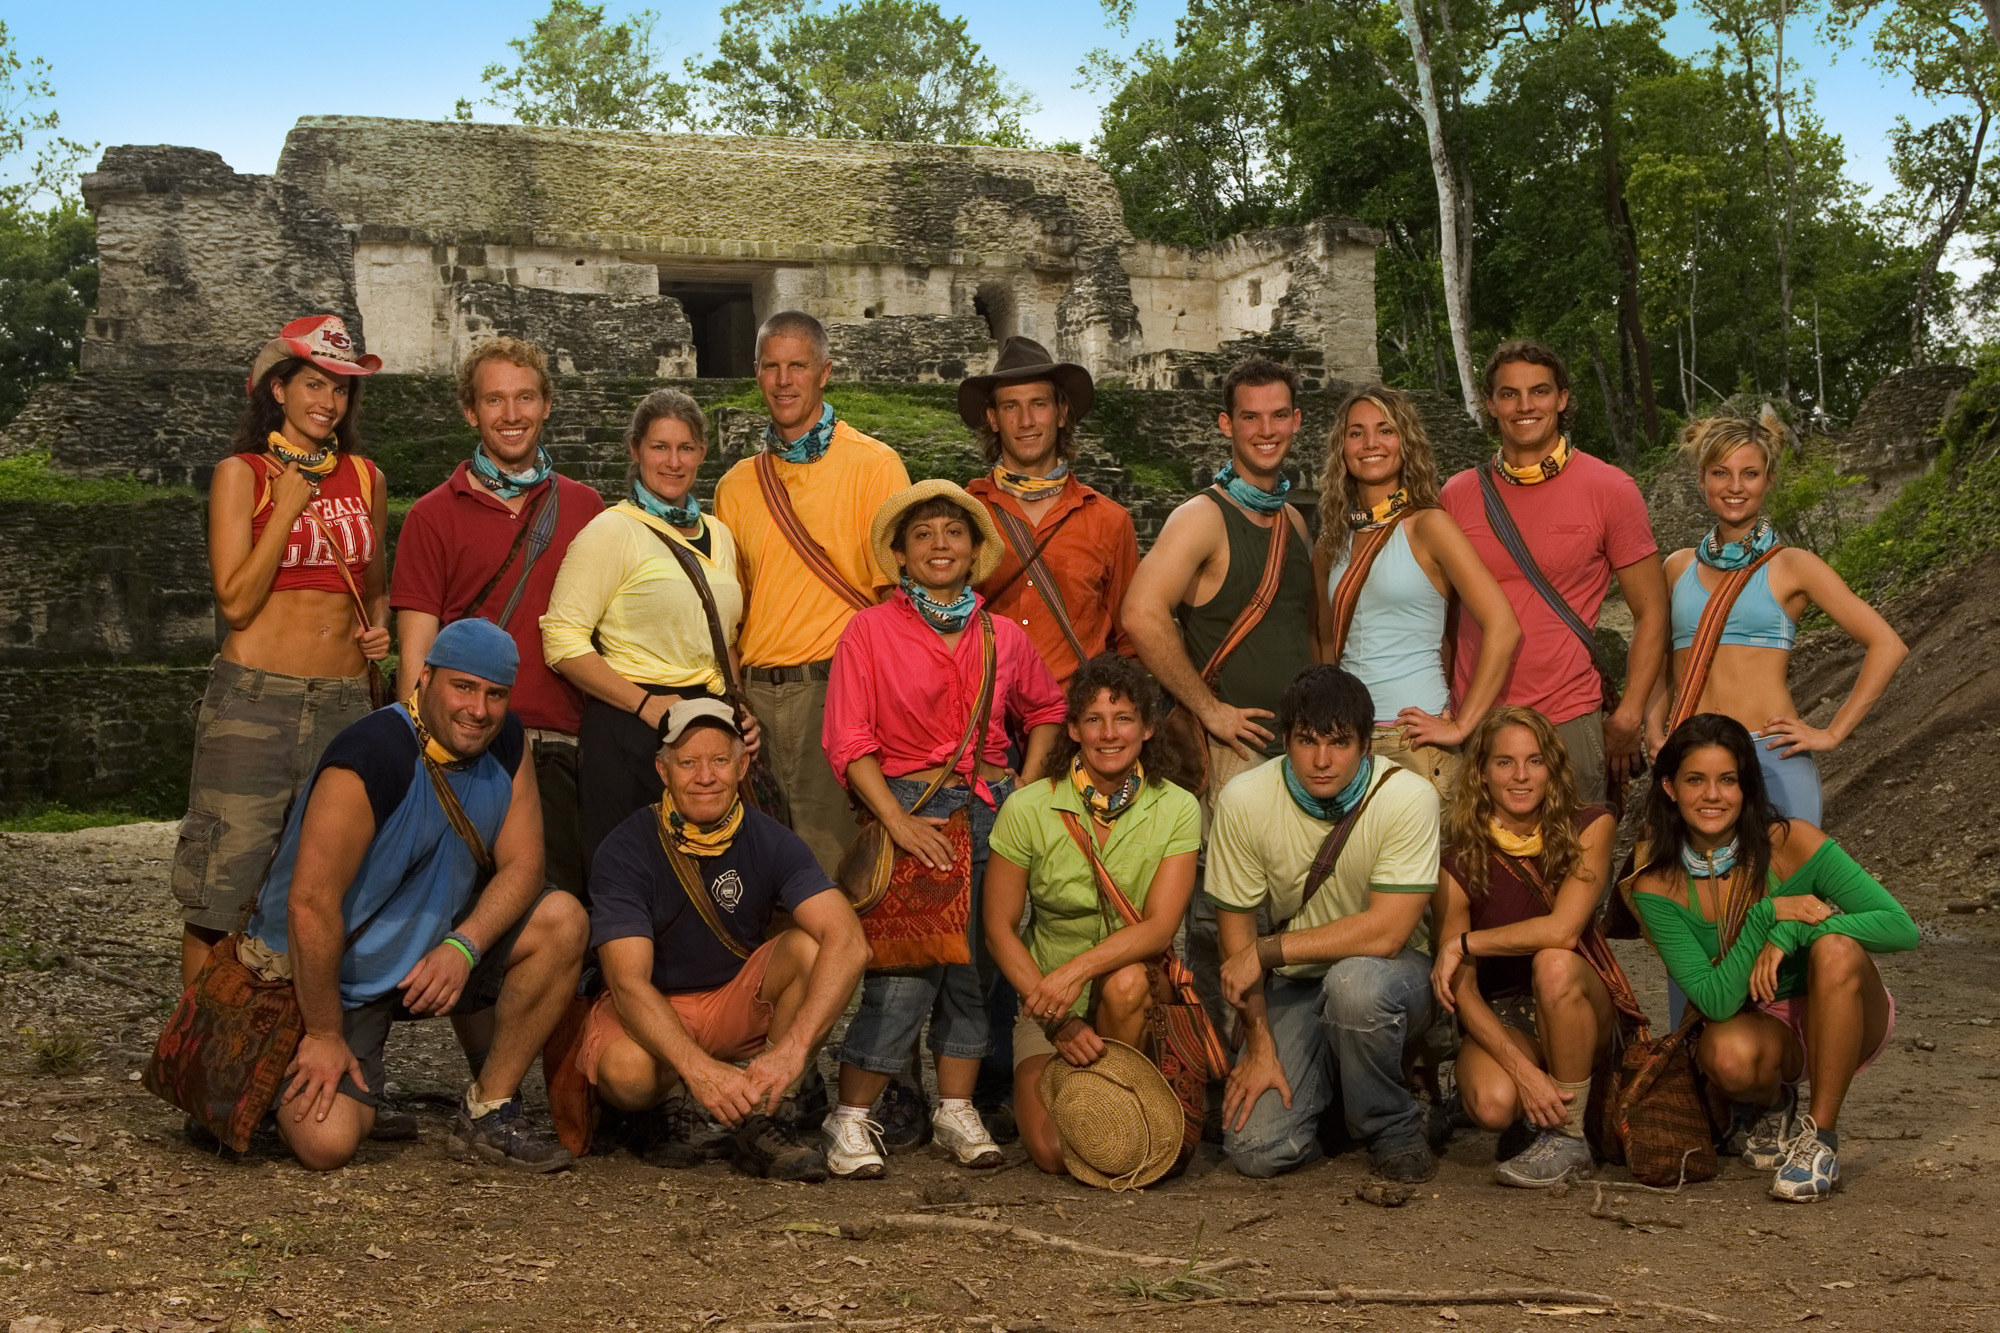 The cast of Survivor: Guatemala